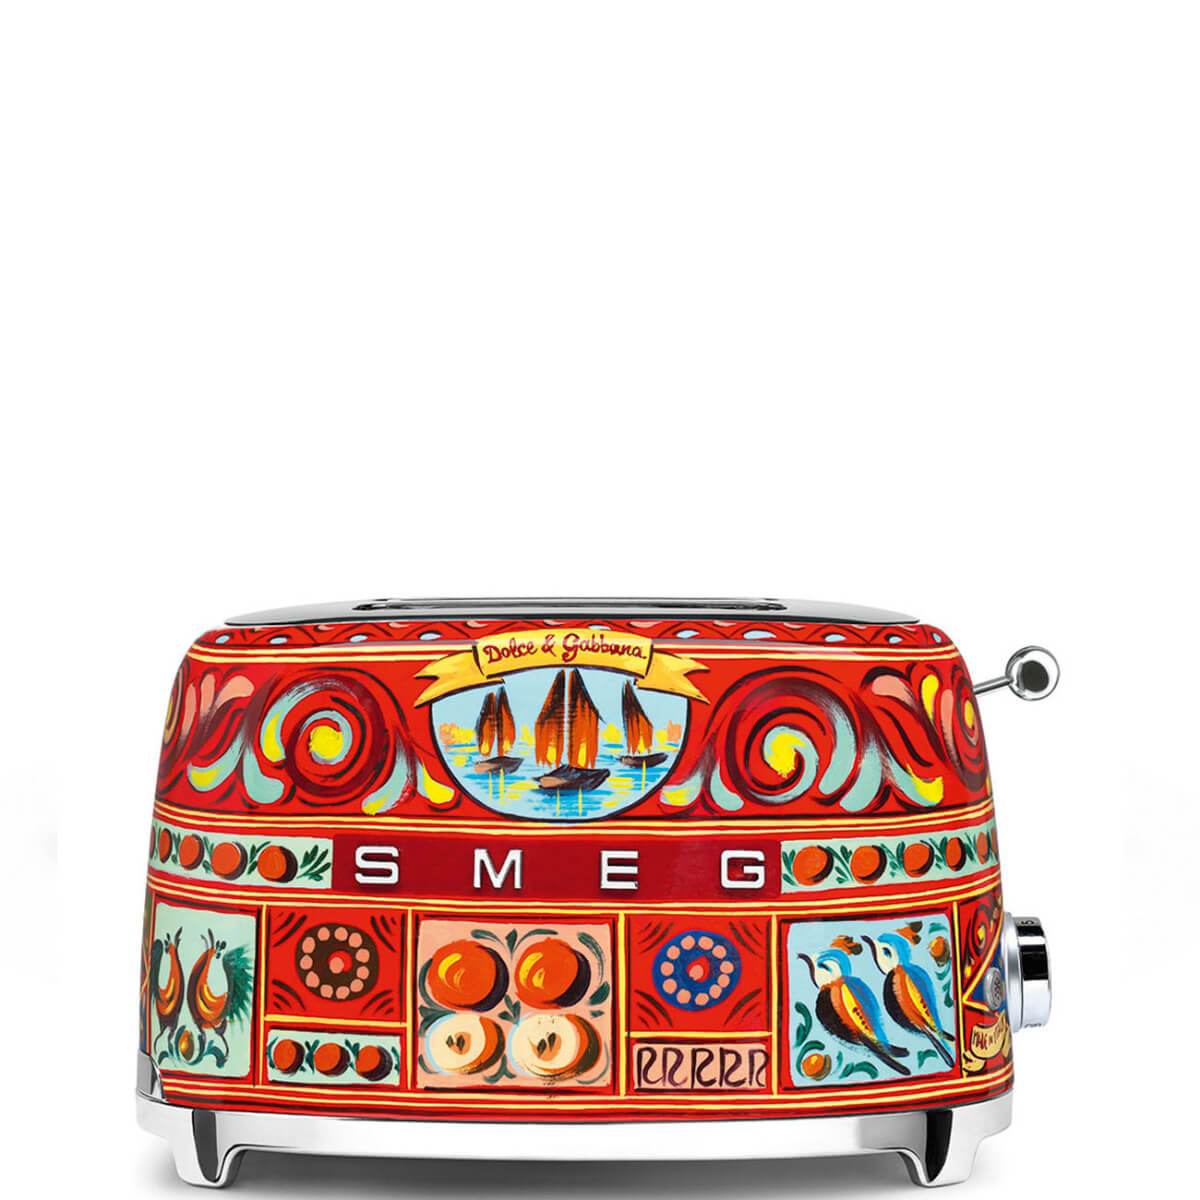 Smeg Dolce & Gabbana 2-Slice Toaster, 50's Retro Style